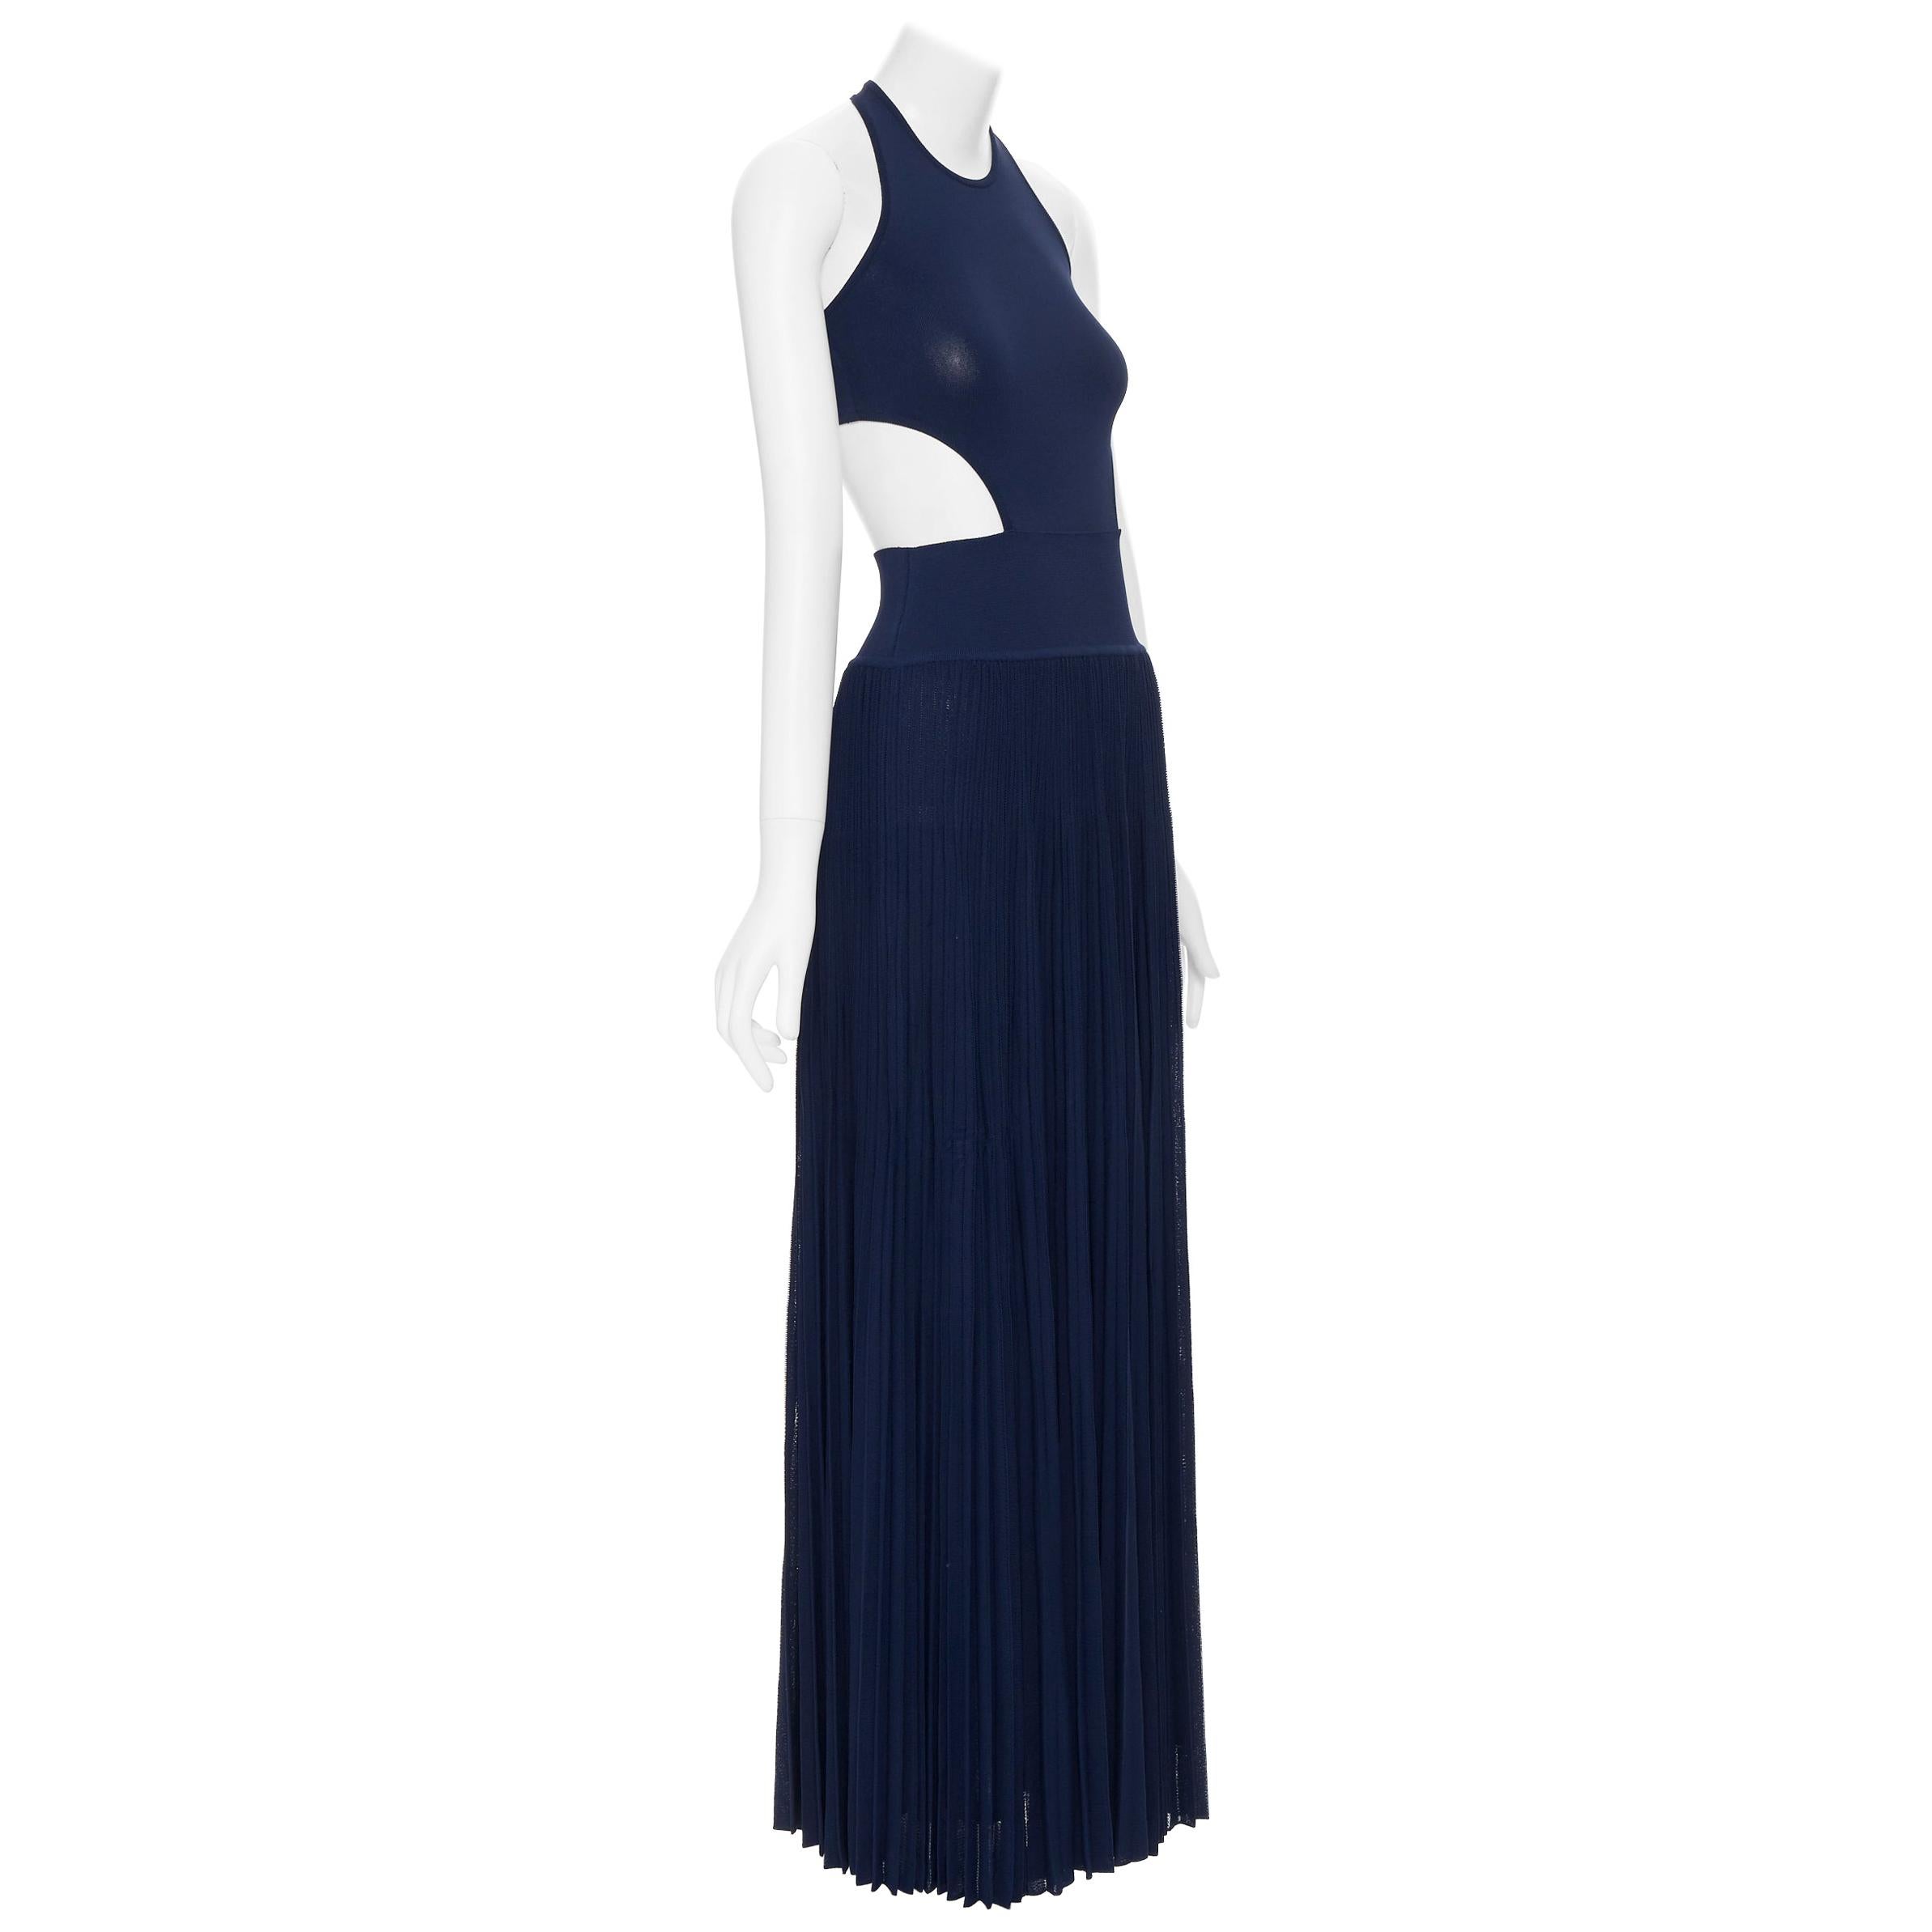 RALPH LAUREN PURPLE LABEL navy blue viscose knit cut out pleated skirt gown US4